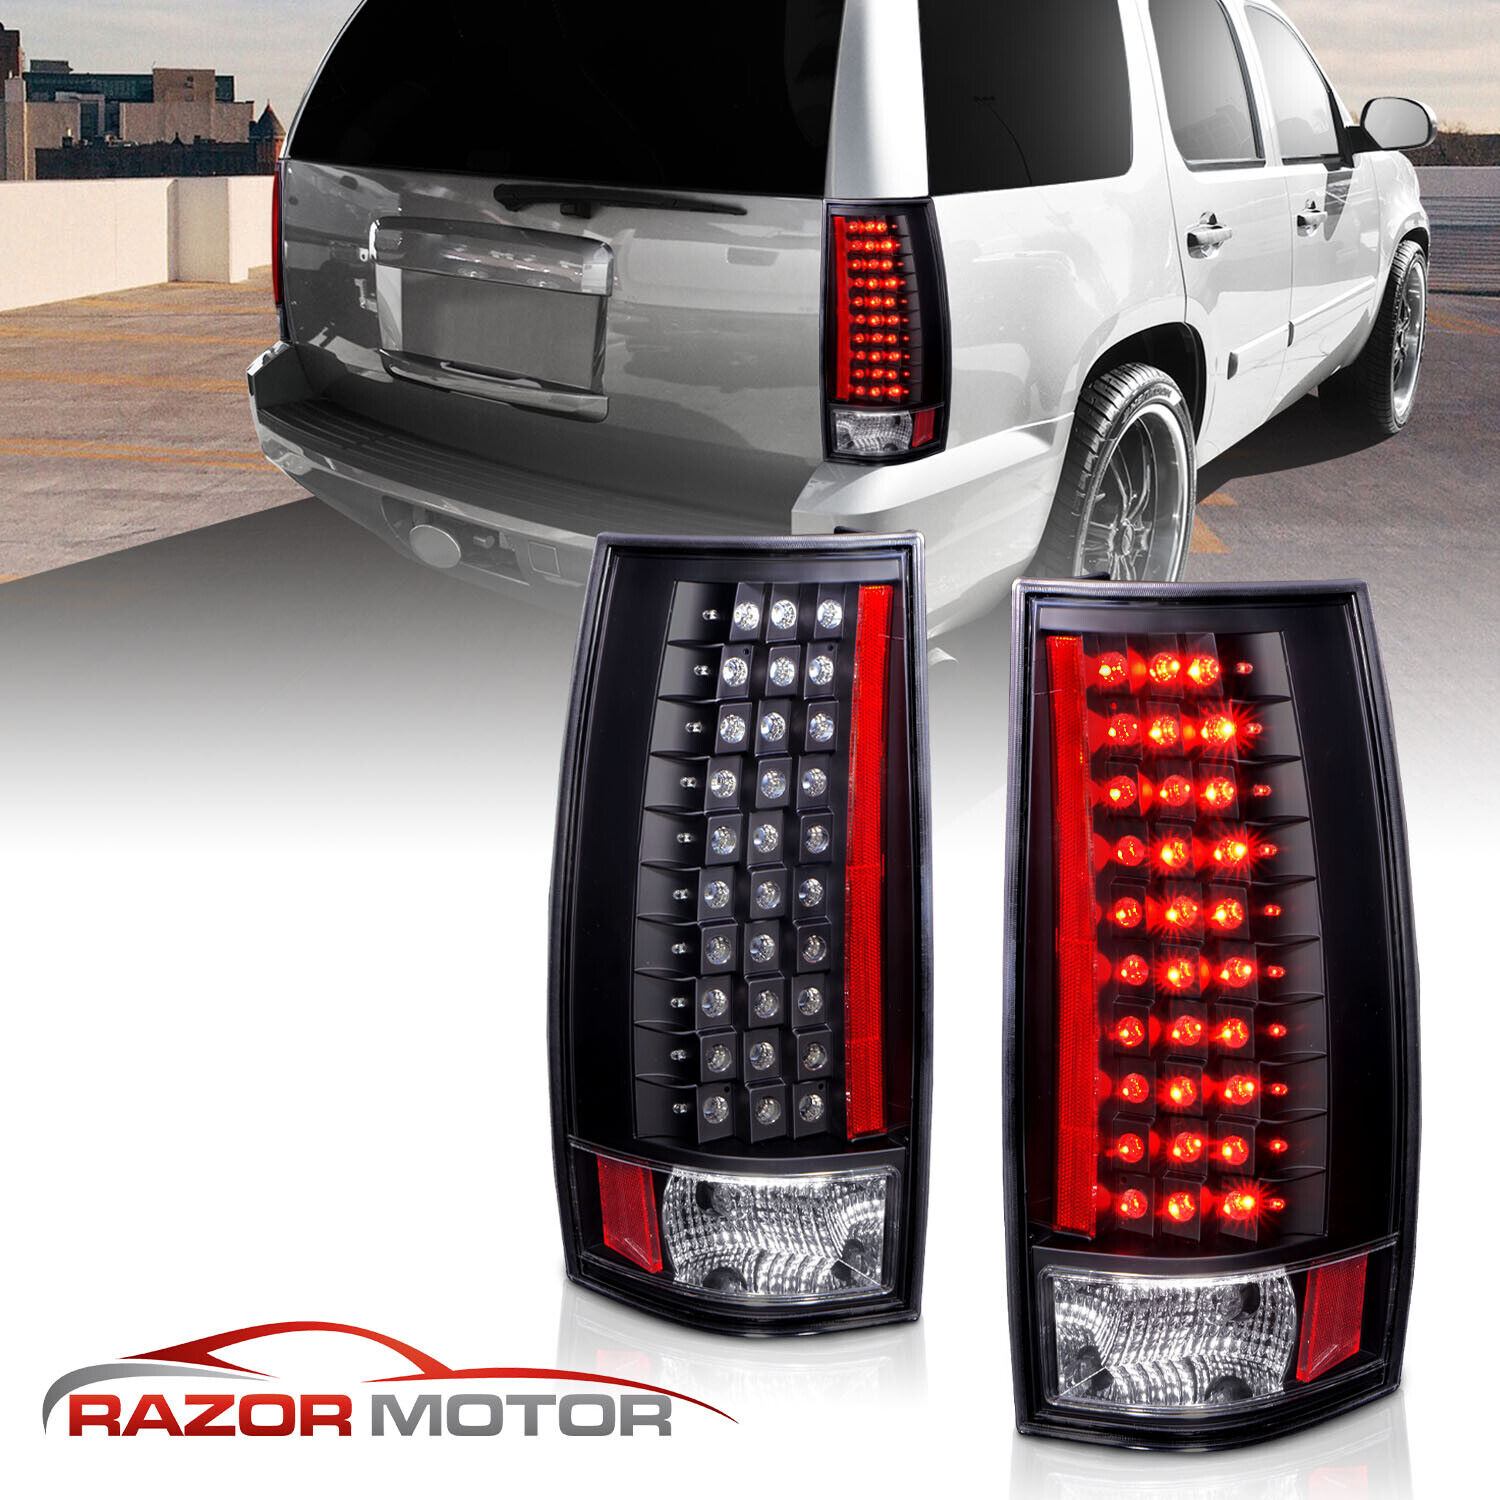 For 2007-2014 Chevy Suburban Tahoe GMC Yukon Black Metal LED Tail Lights Pair